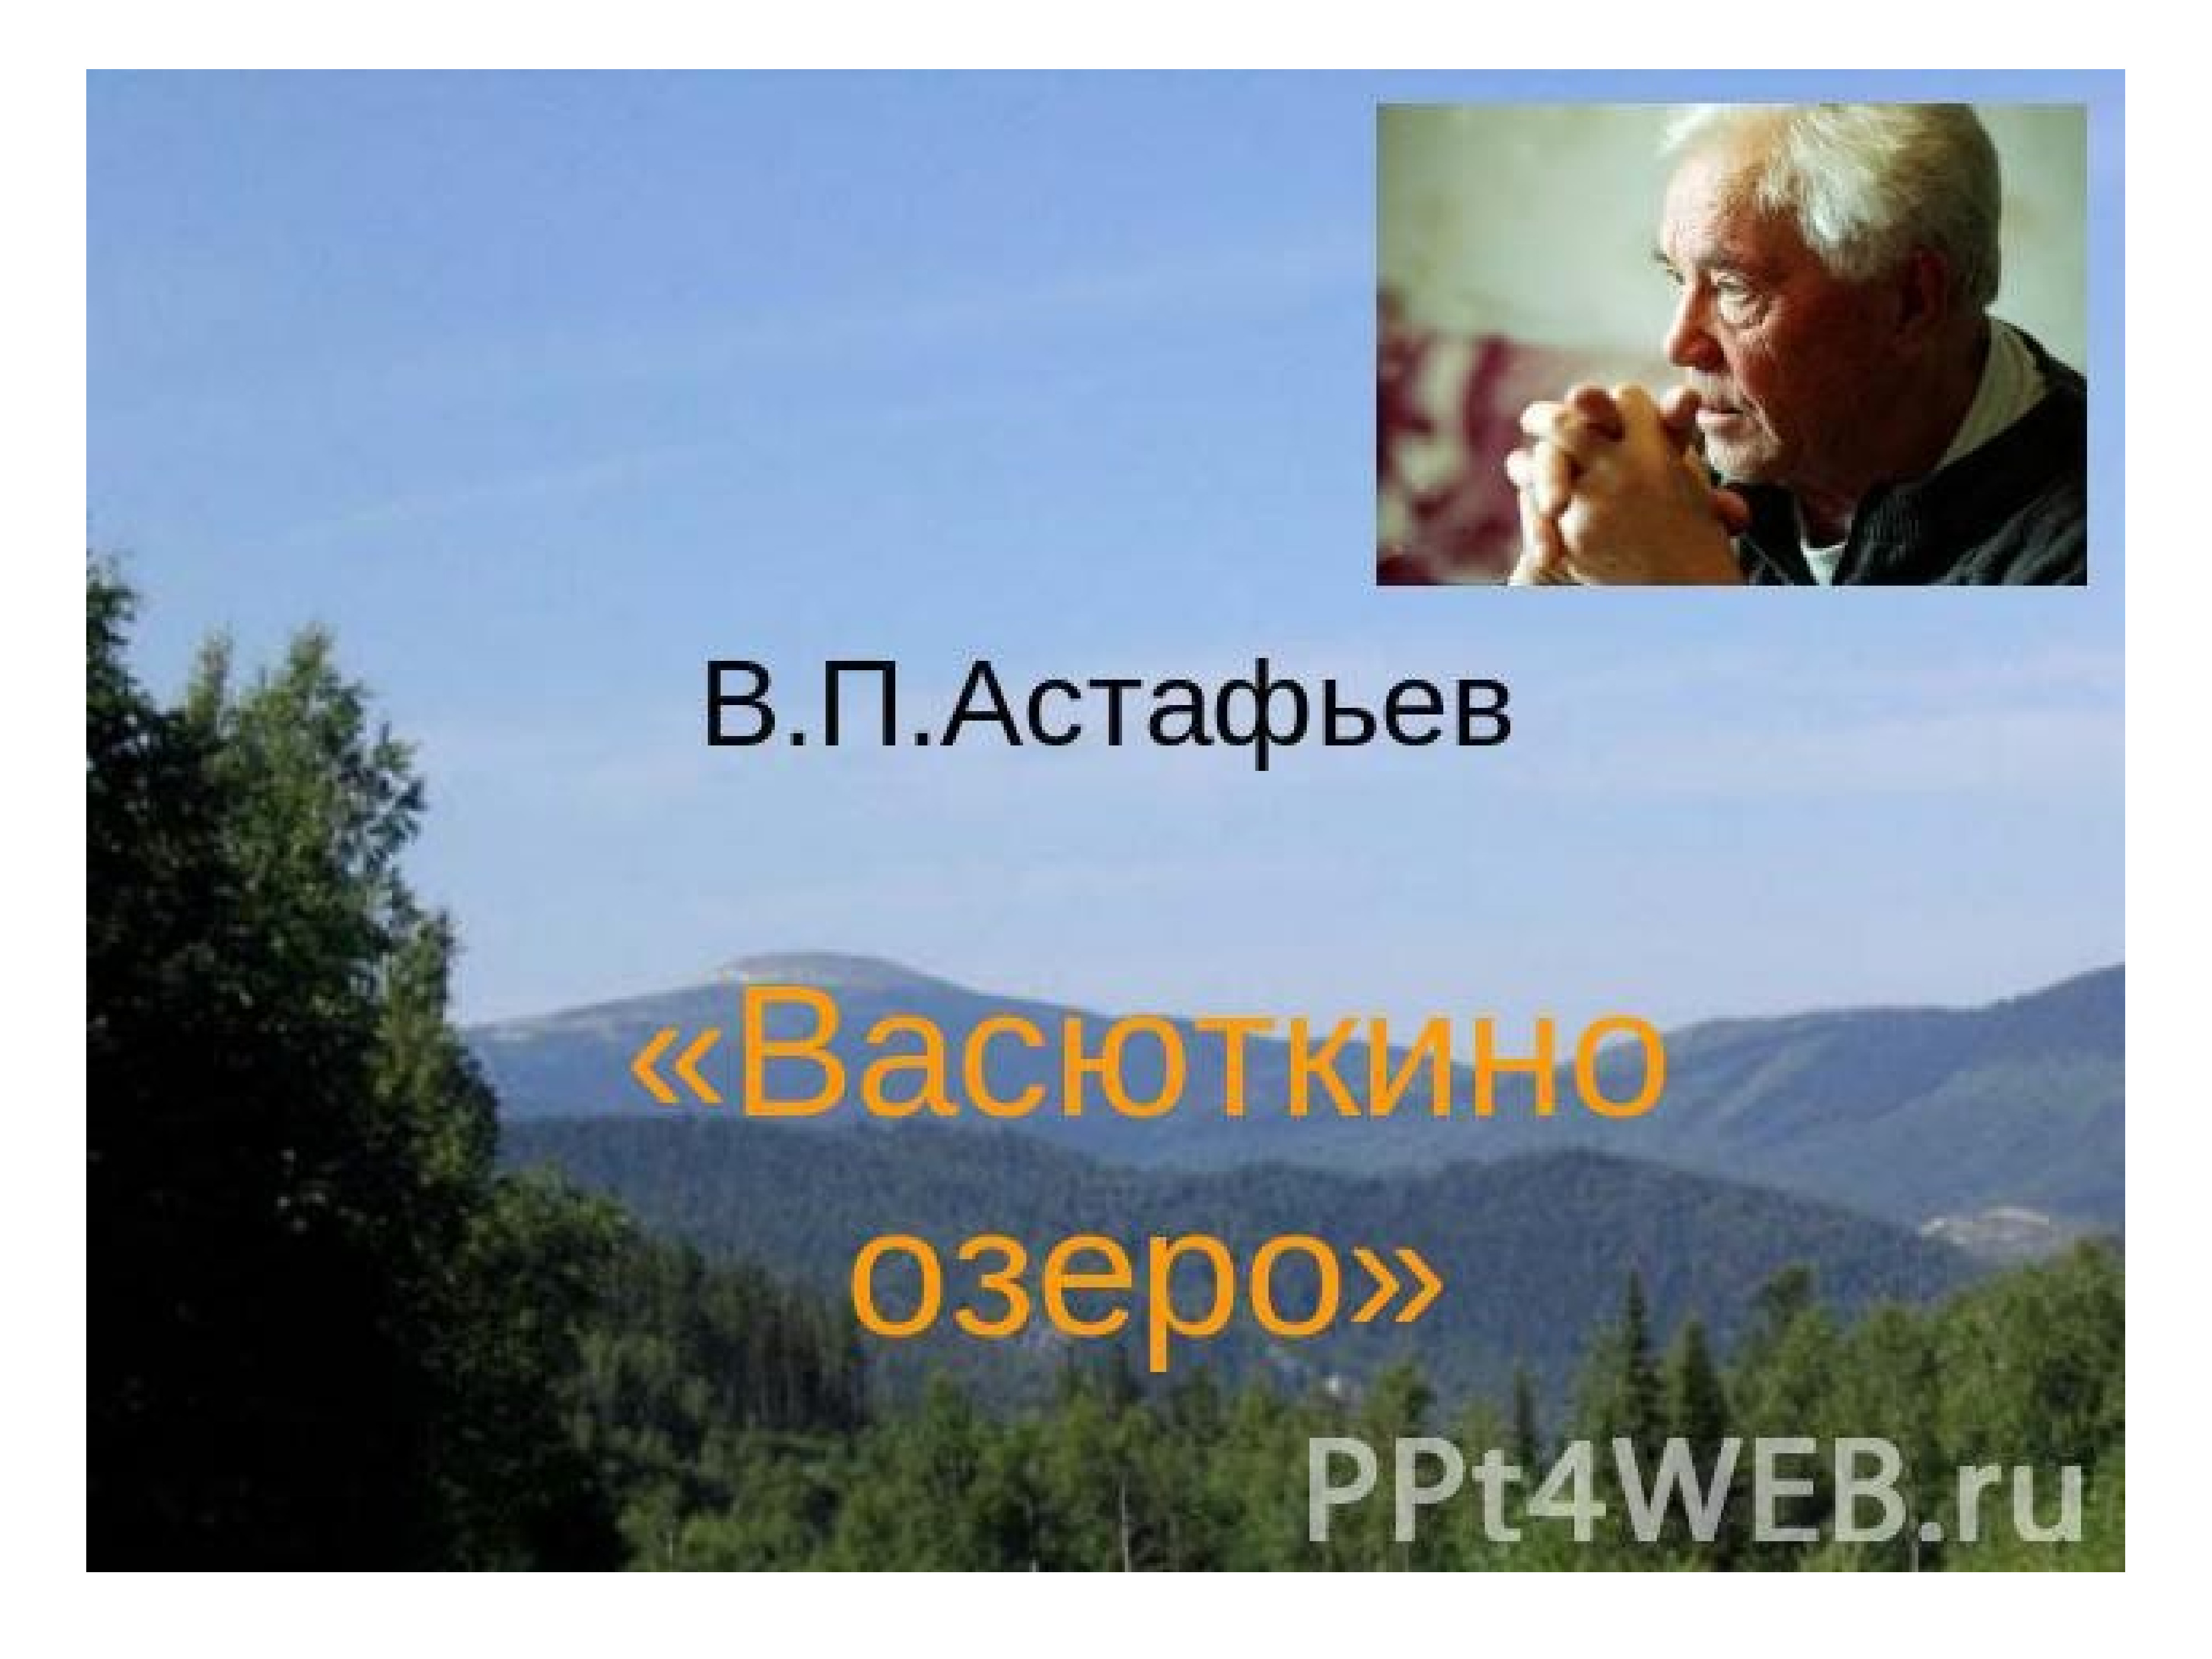 В.П. Астафьев « Васюткино озеро» фото